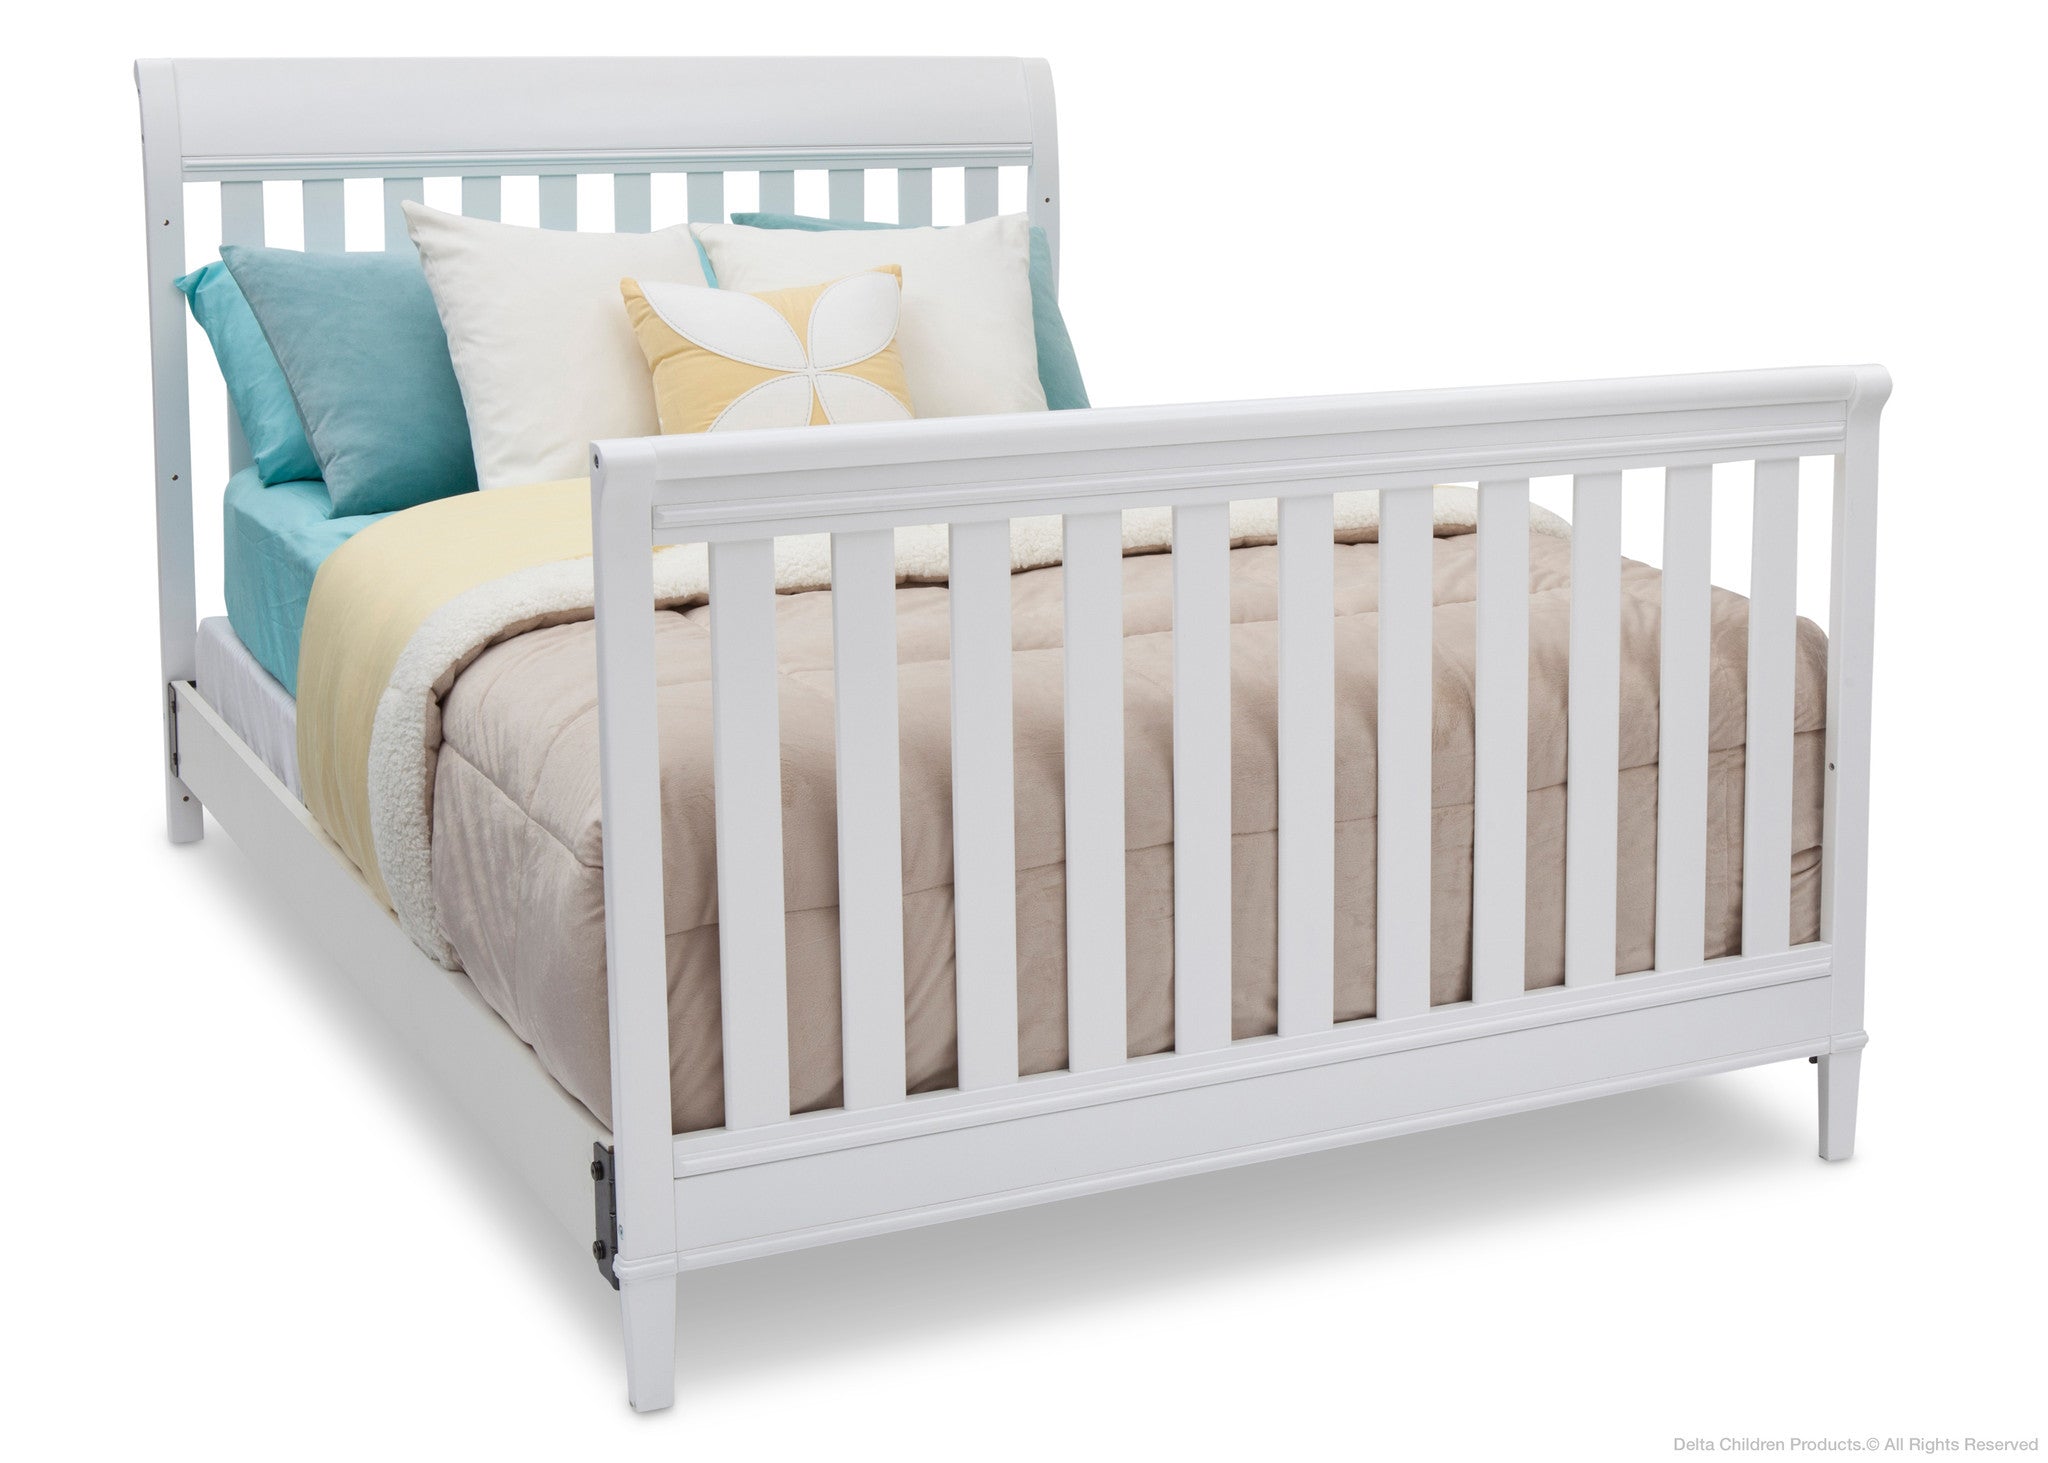 delta crib full size bed conversion